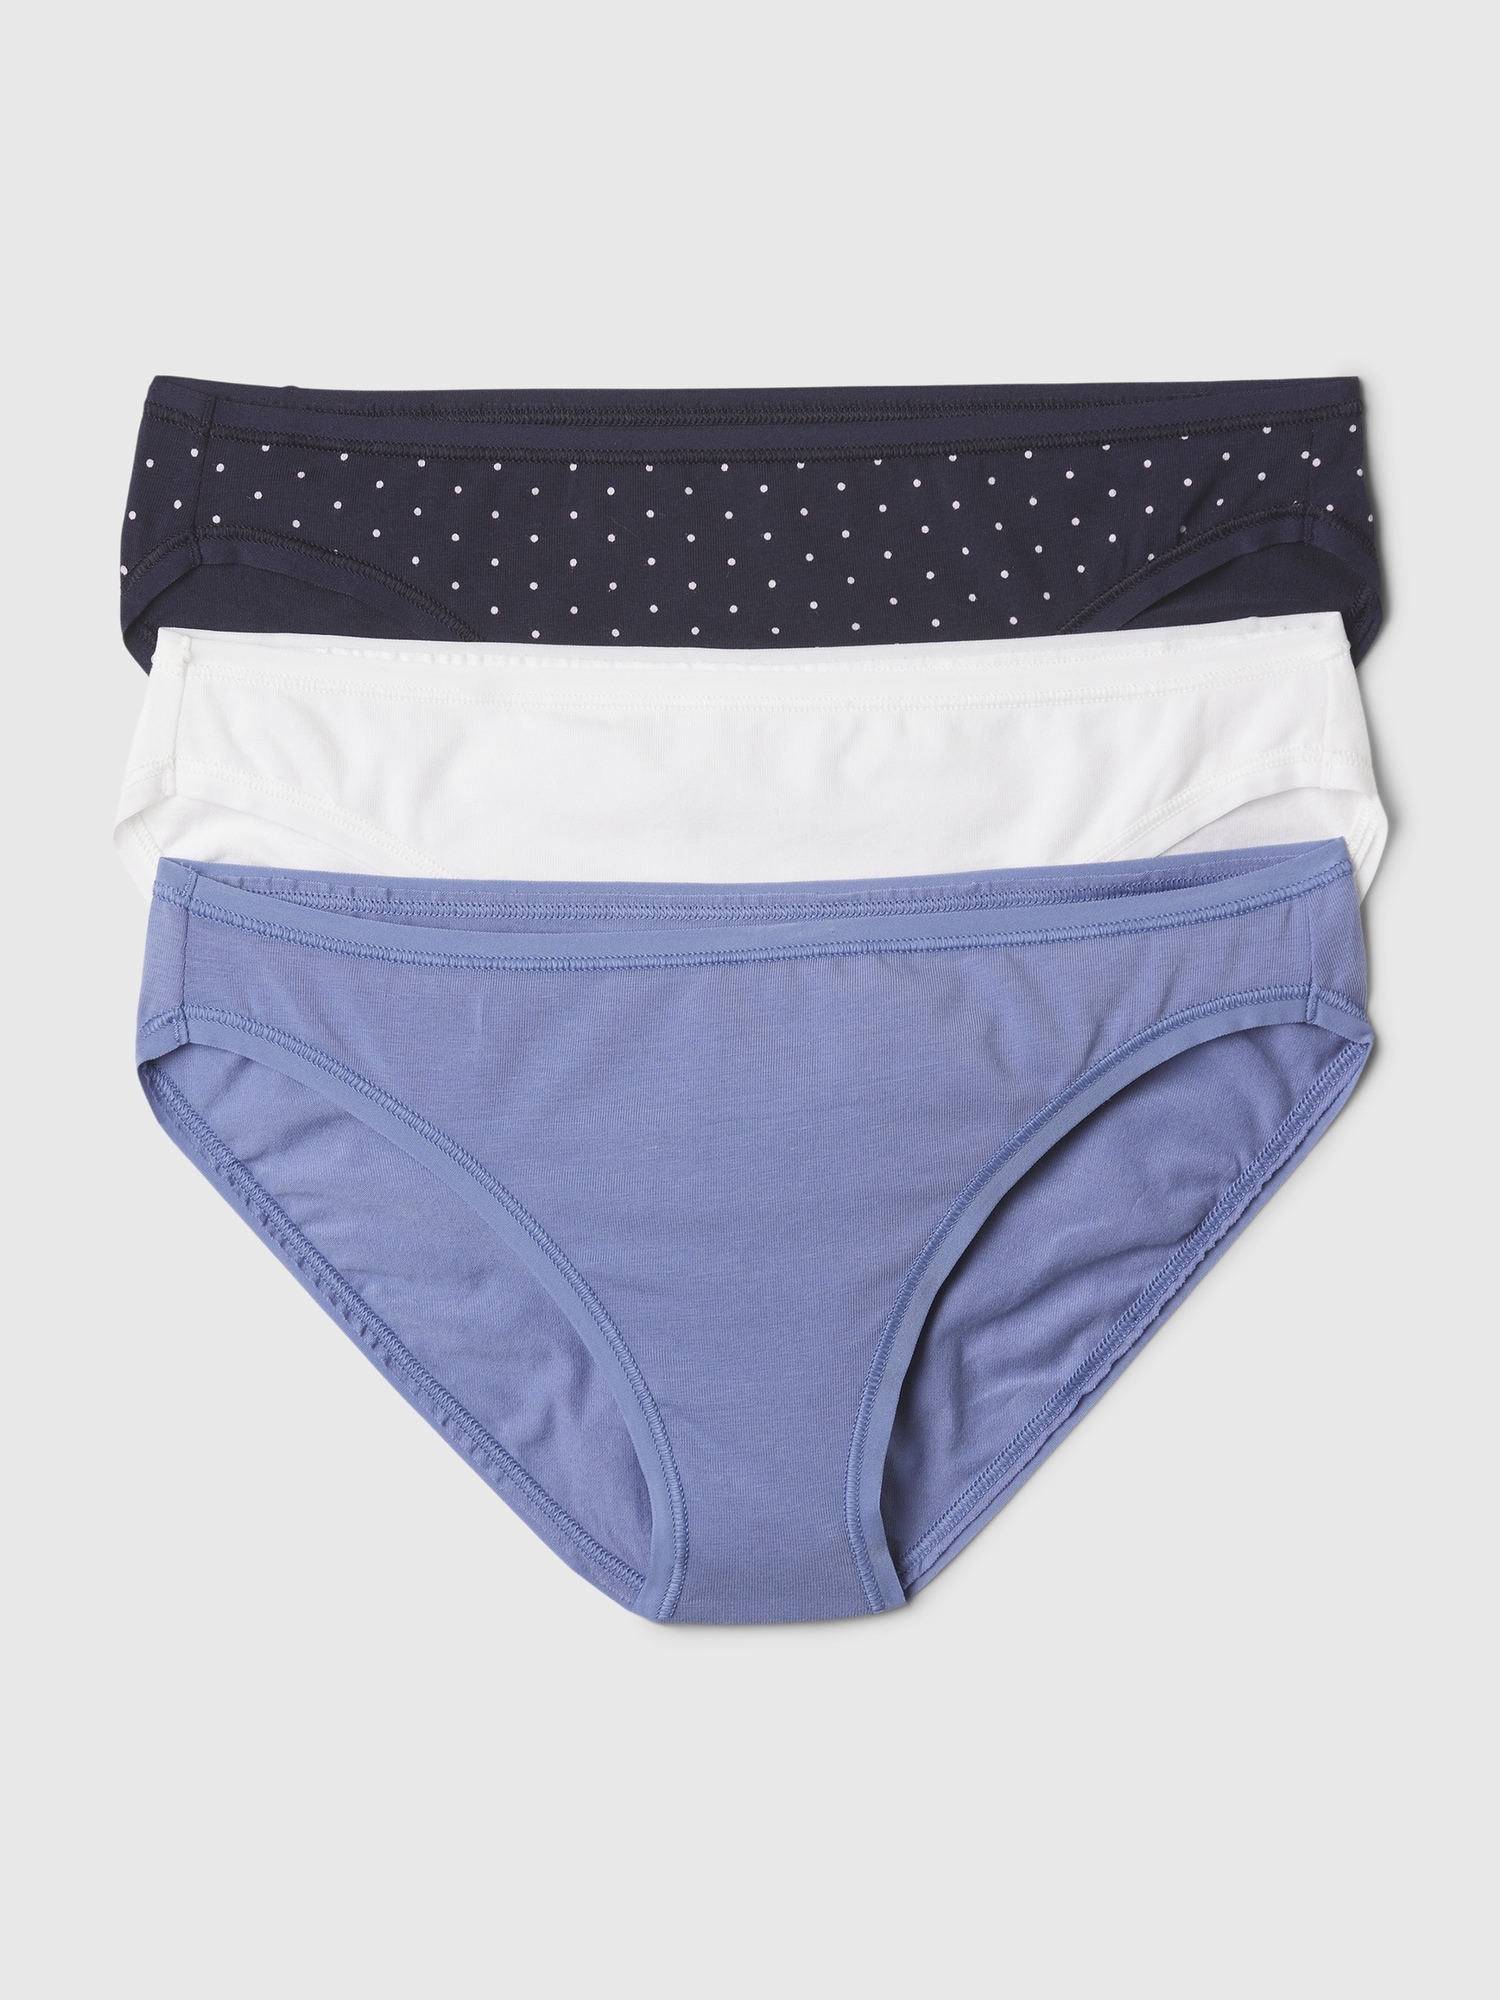 Women's Cotton Bikini Underwear (3 Pack)